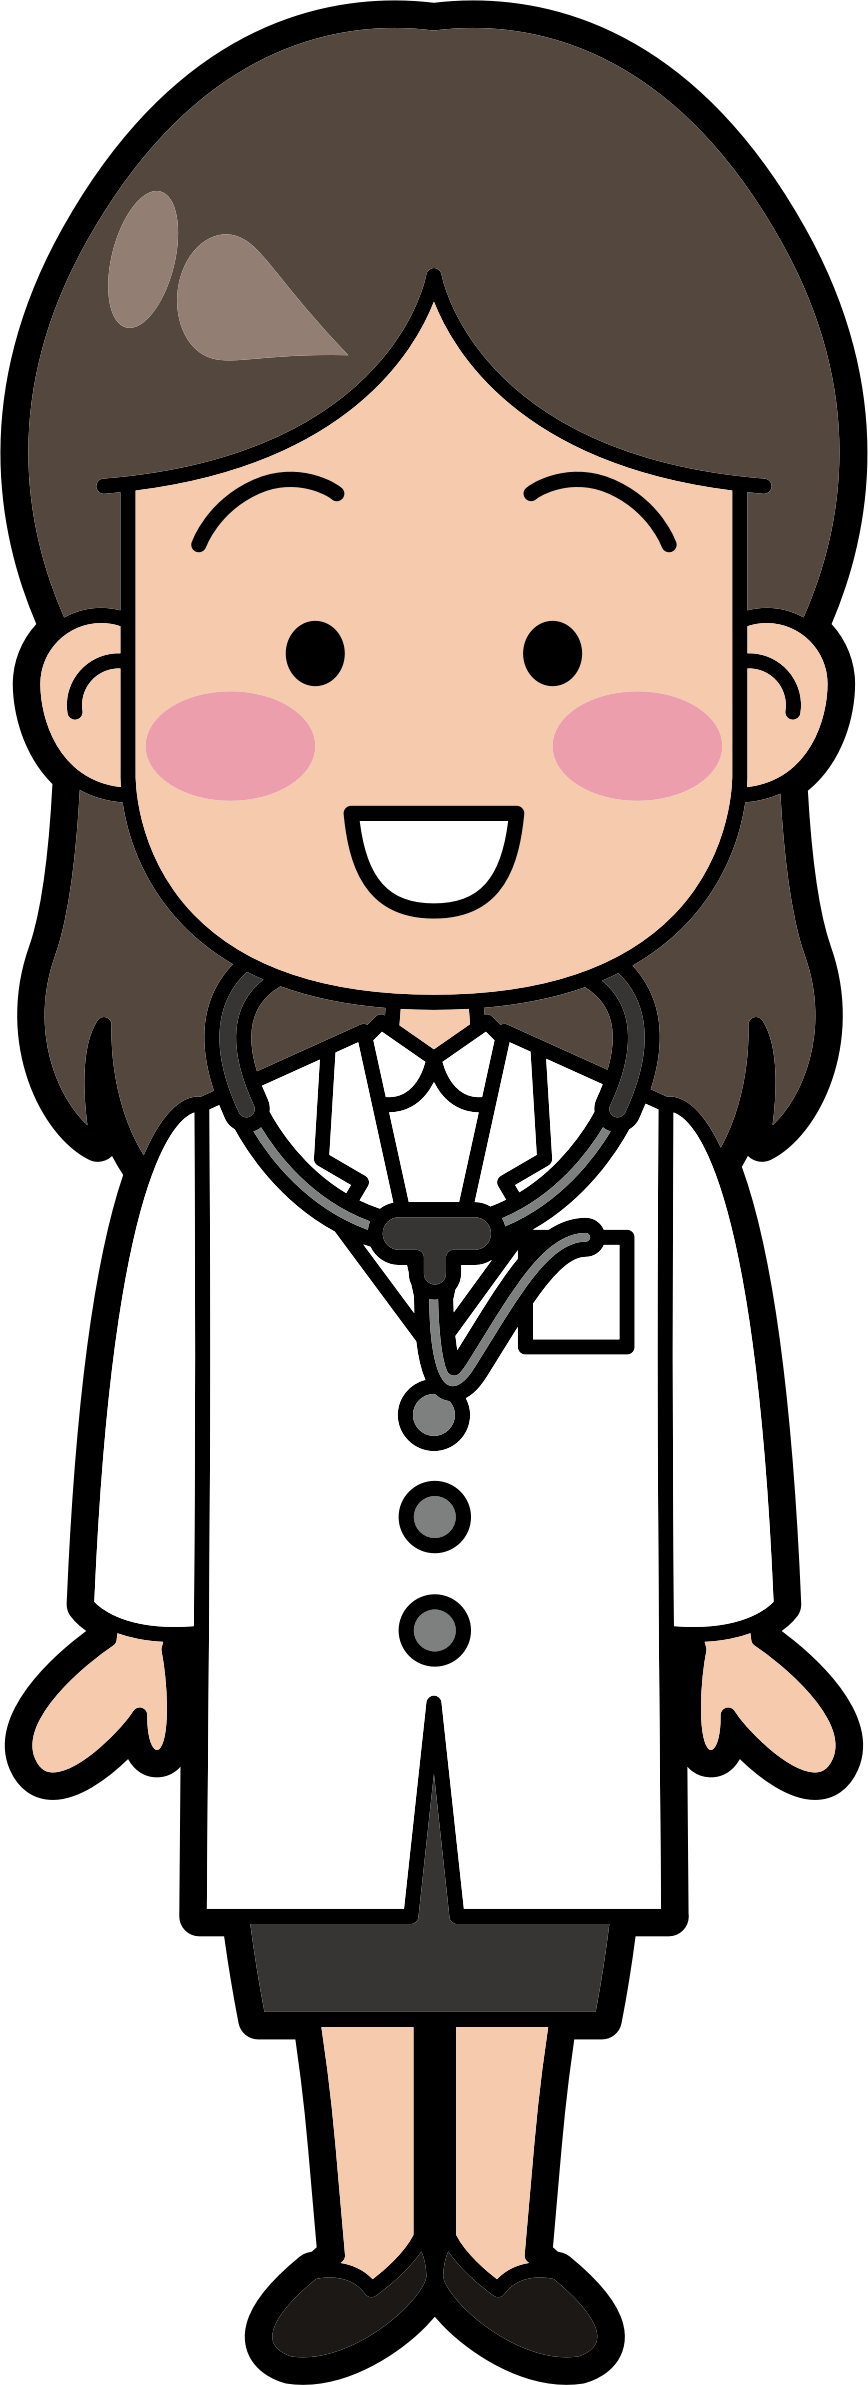 A public domain image female doctor clipart